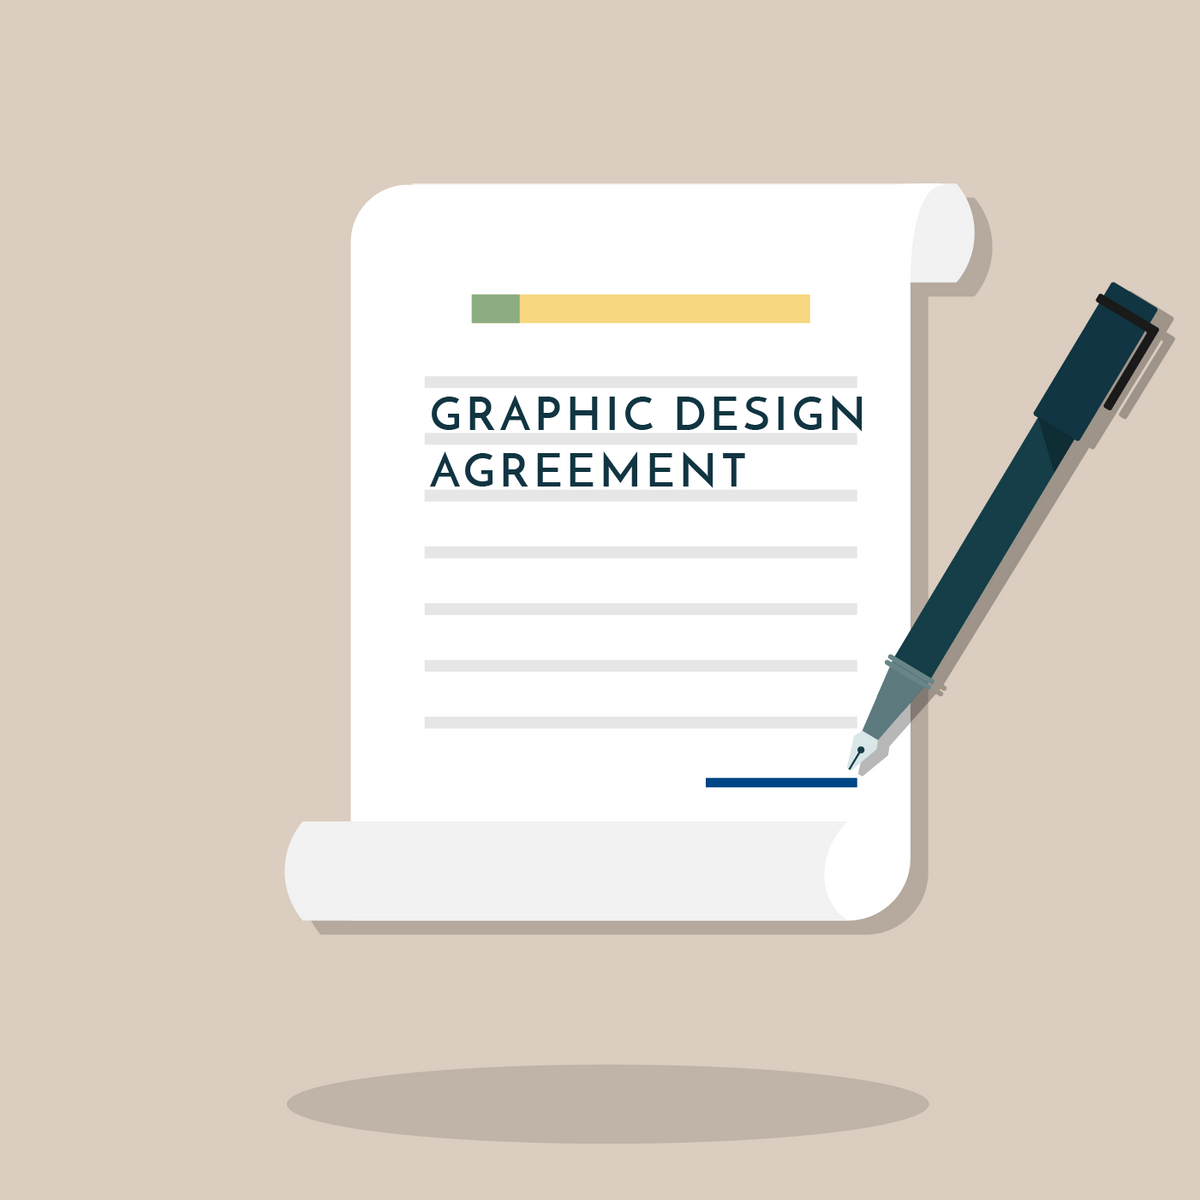 Graphic Design Agreement